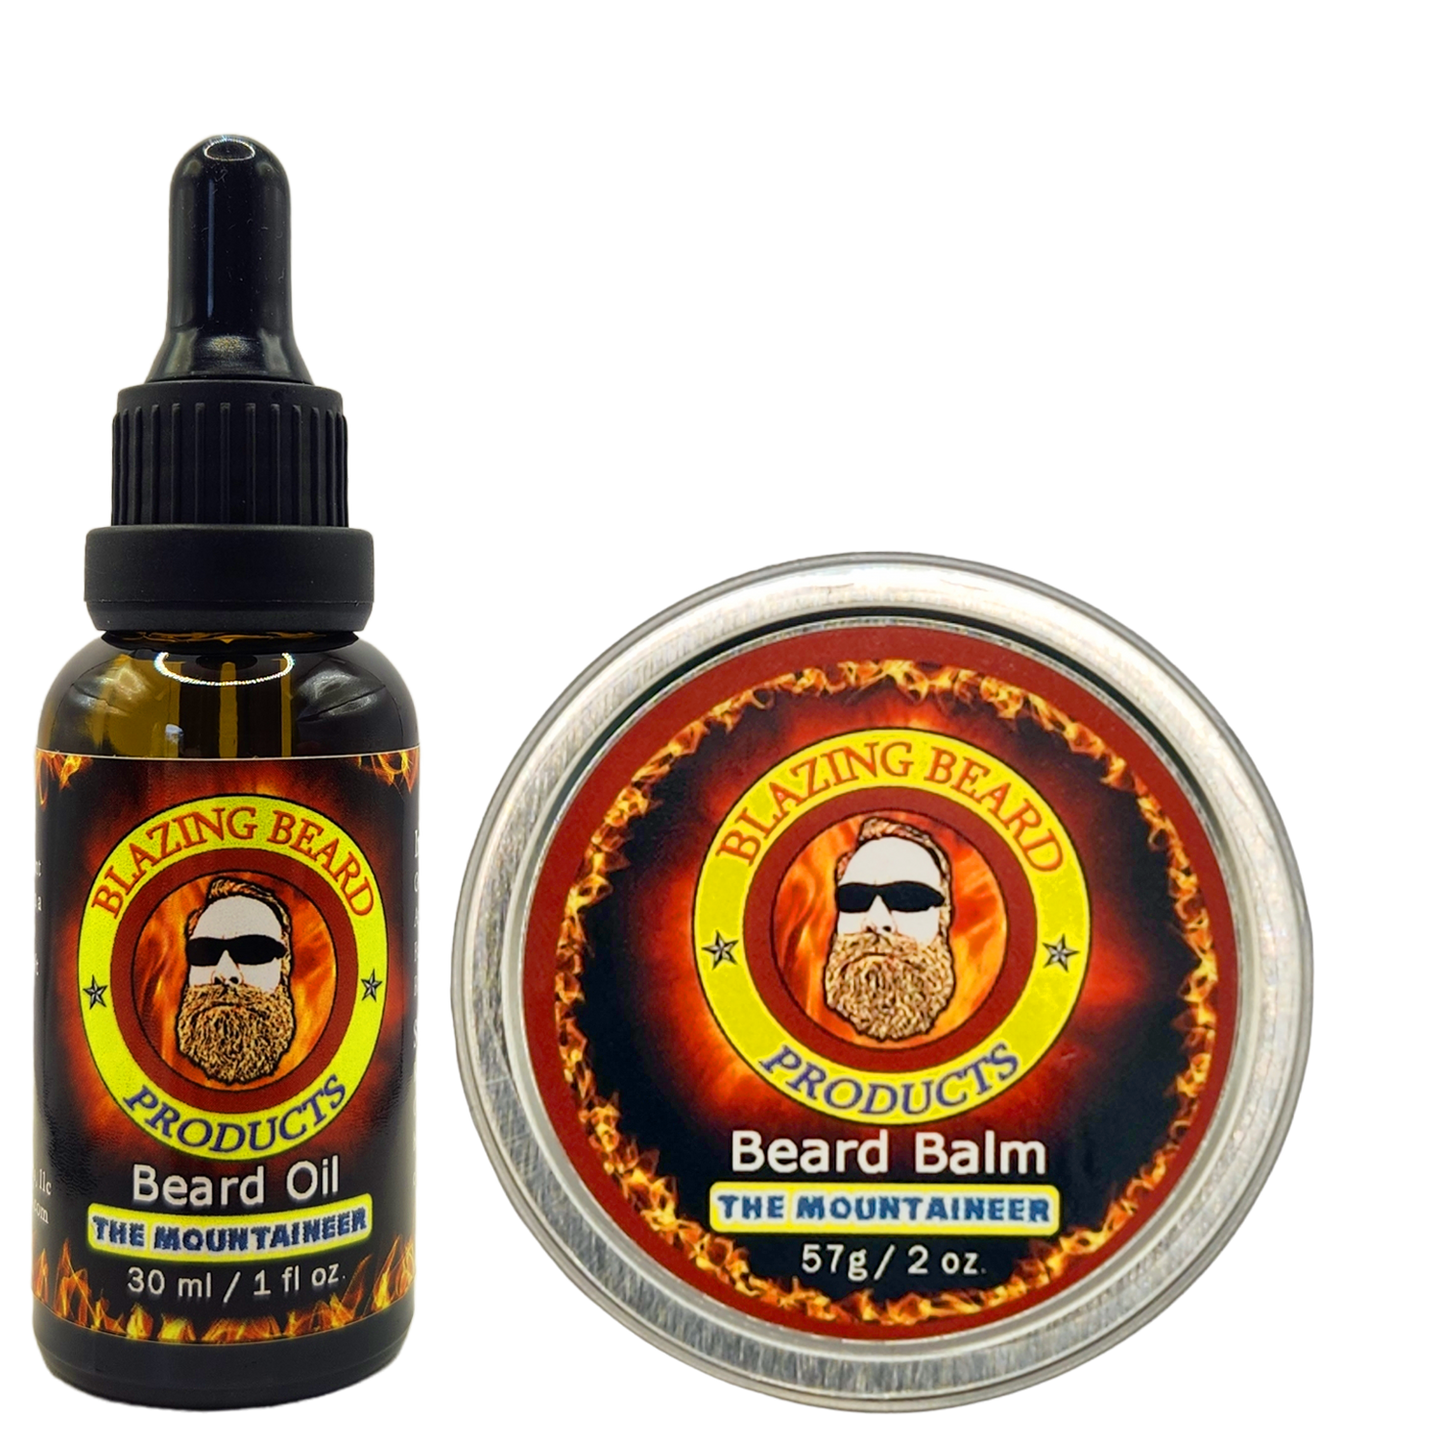 Beard Oil & Beard Balm - The Mountaineer